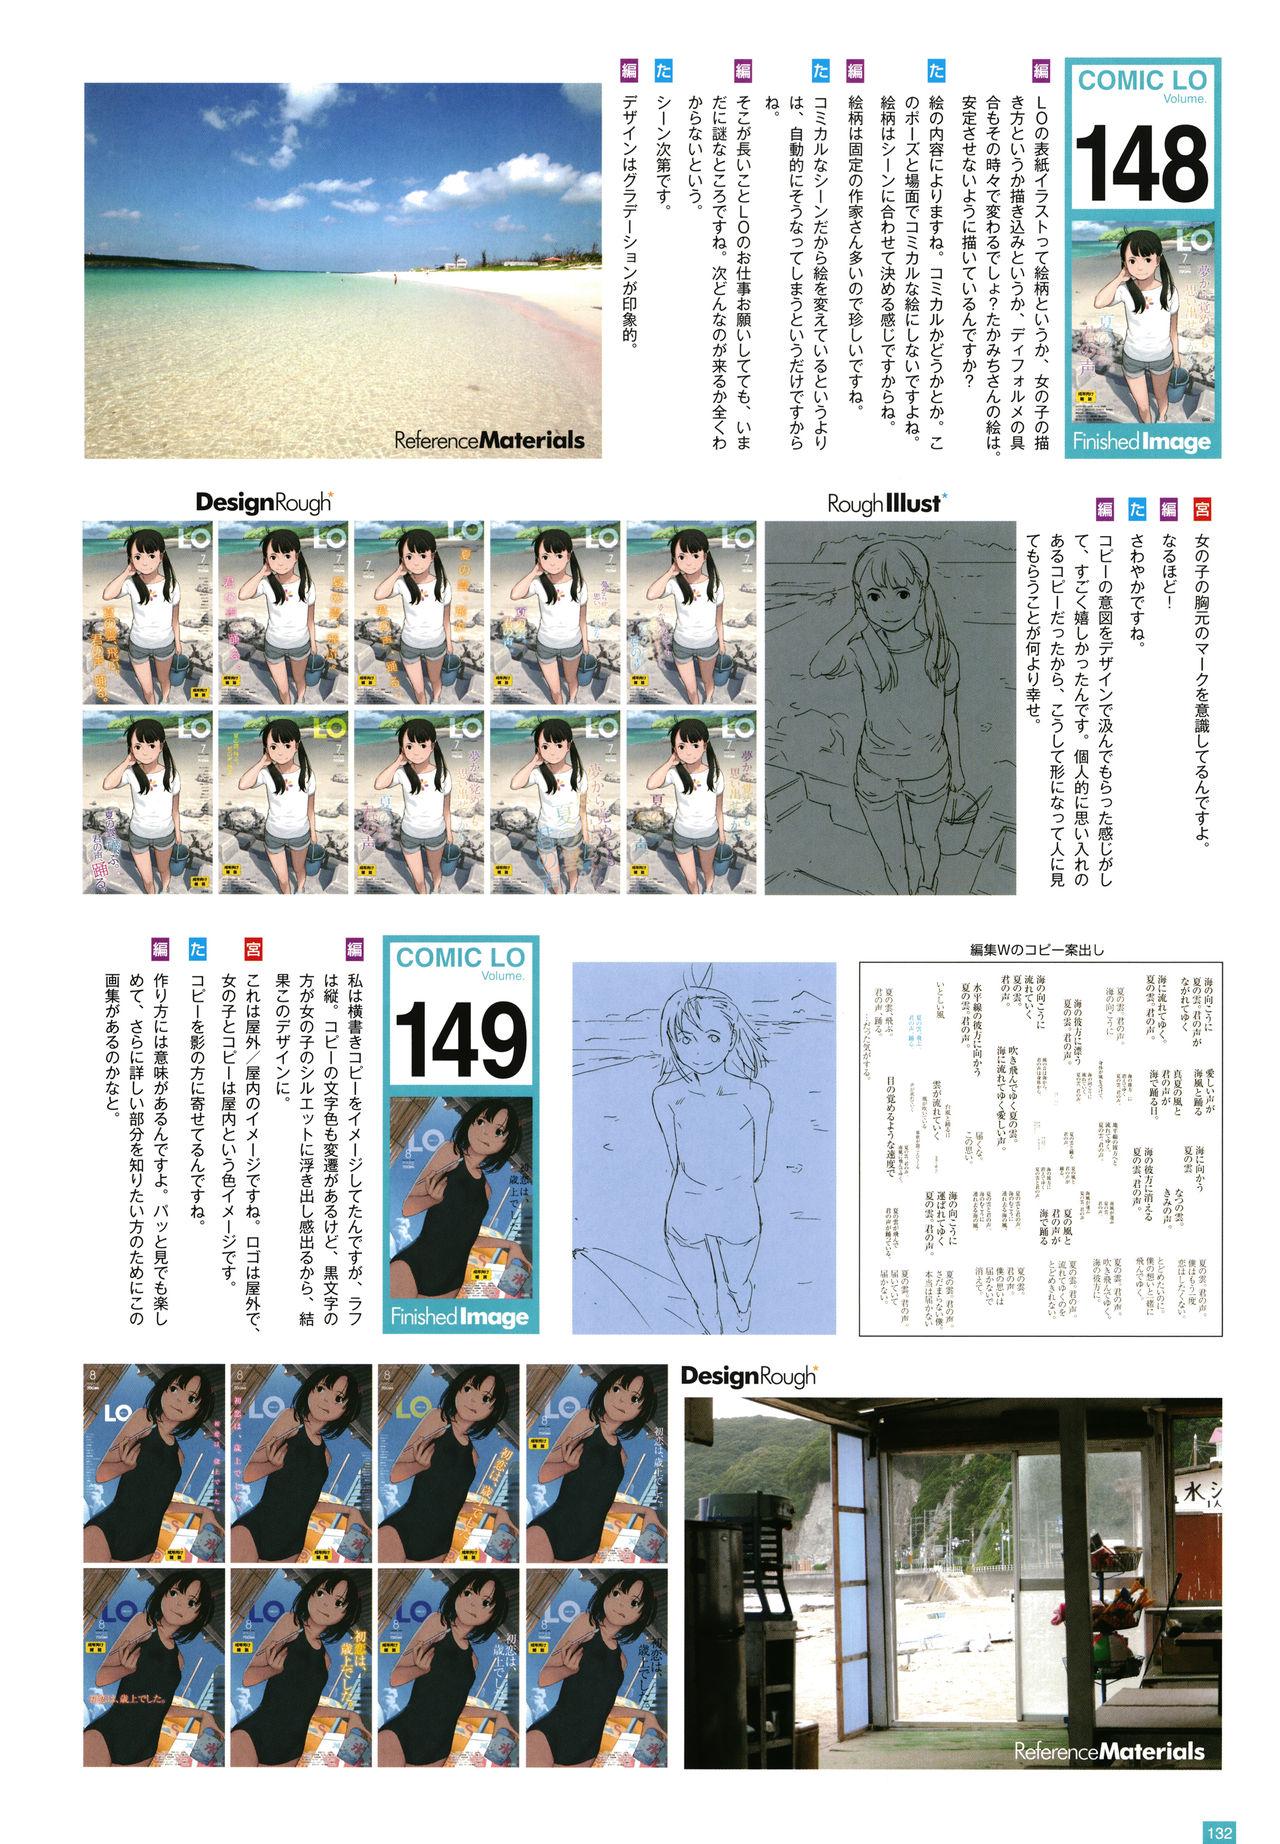 [Takamichi] LO Artbook 2-B TAKAMICHI LO-fi WORKS 134